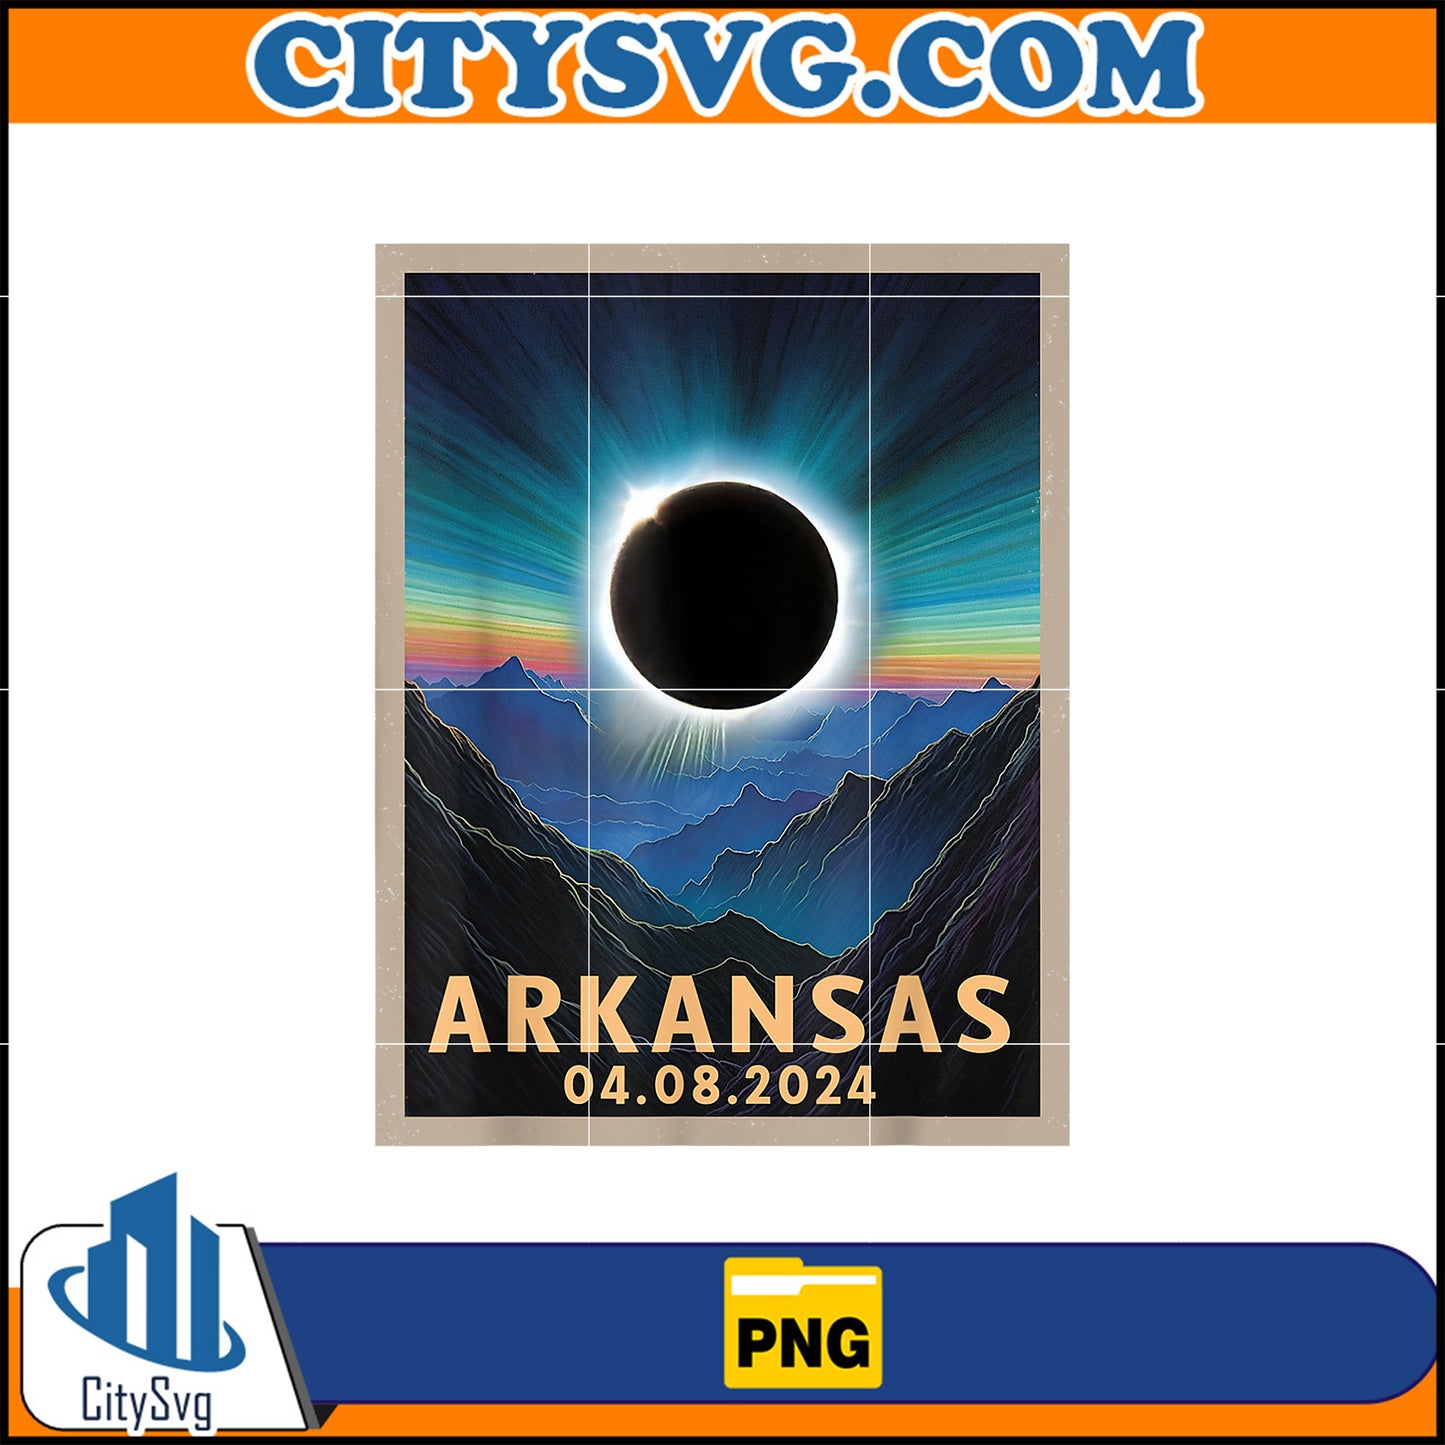 Arkansas04.08.2024Png